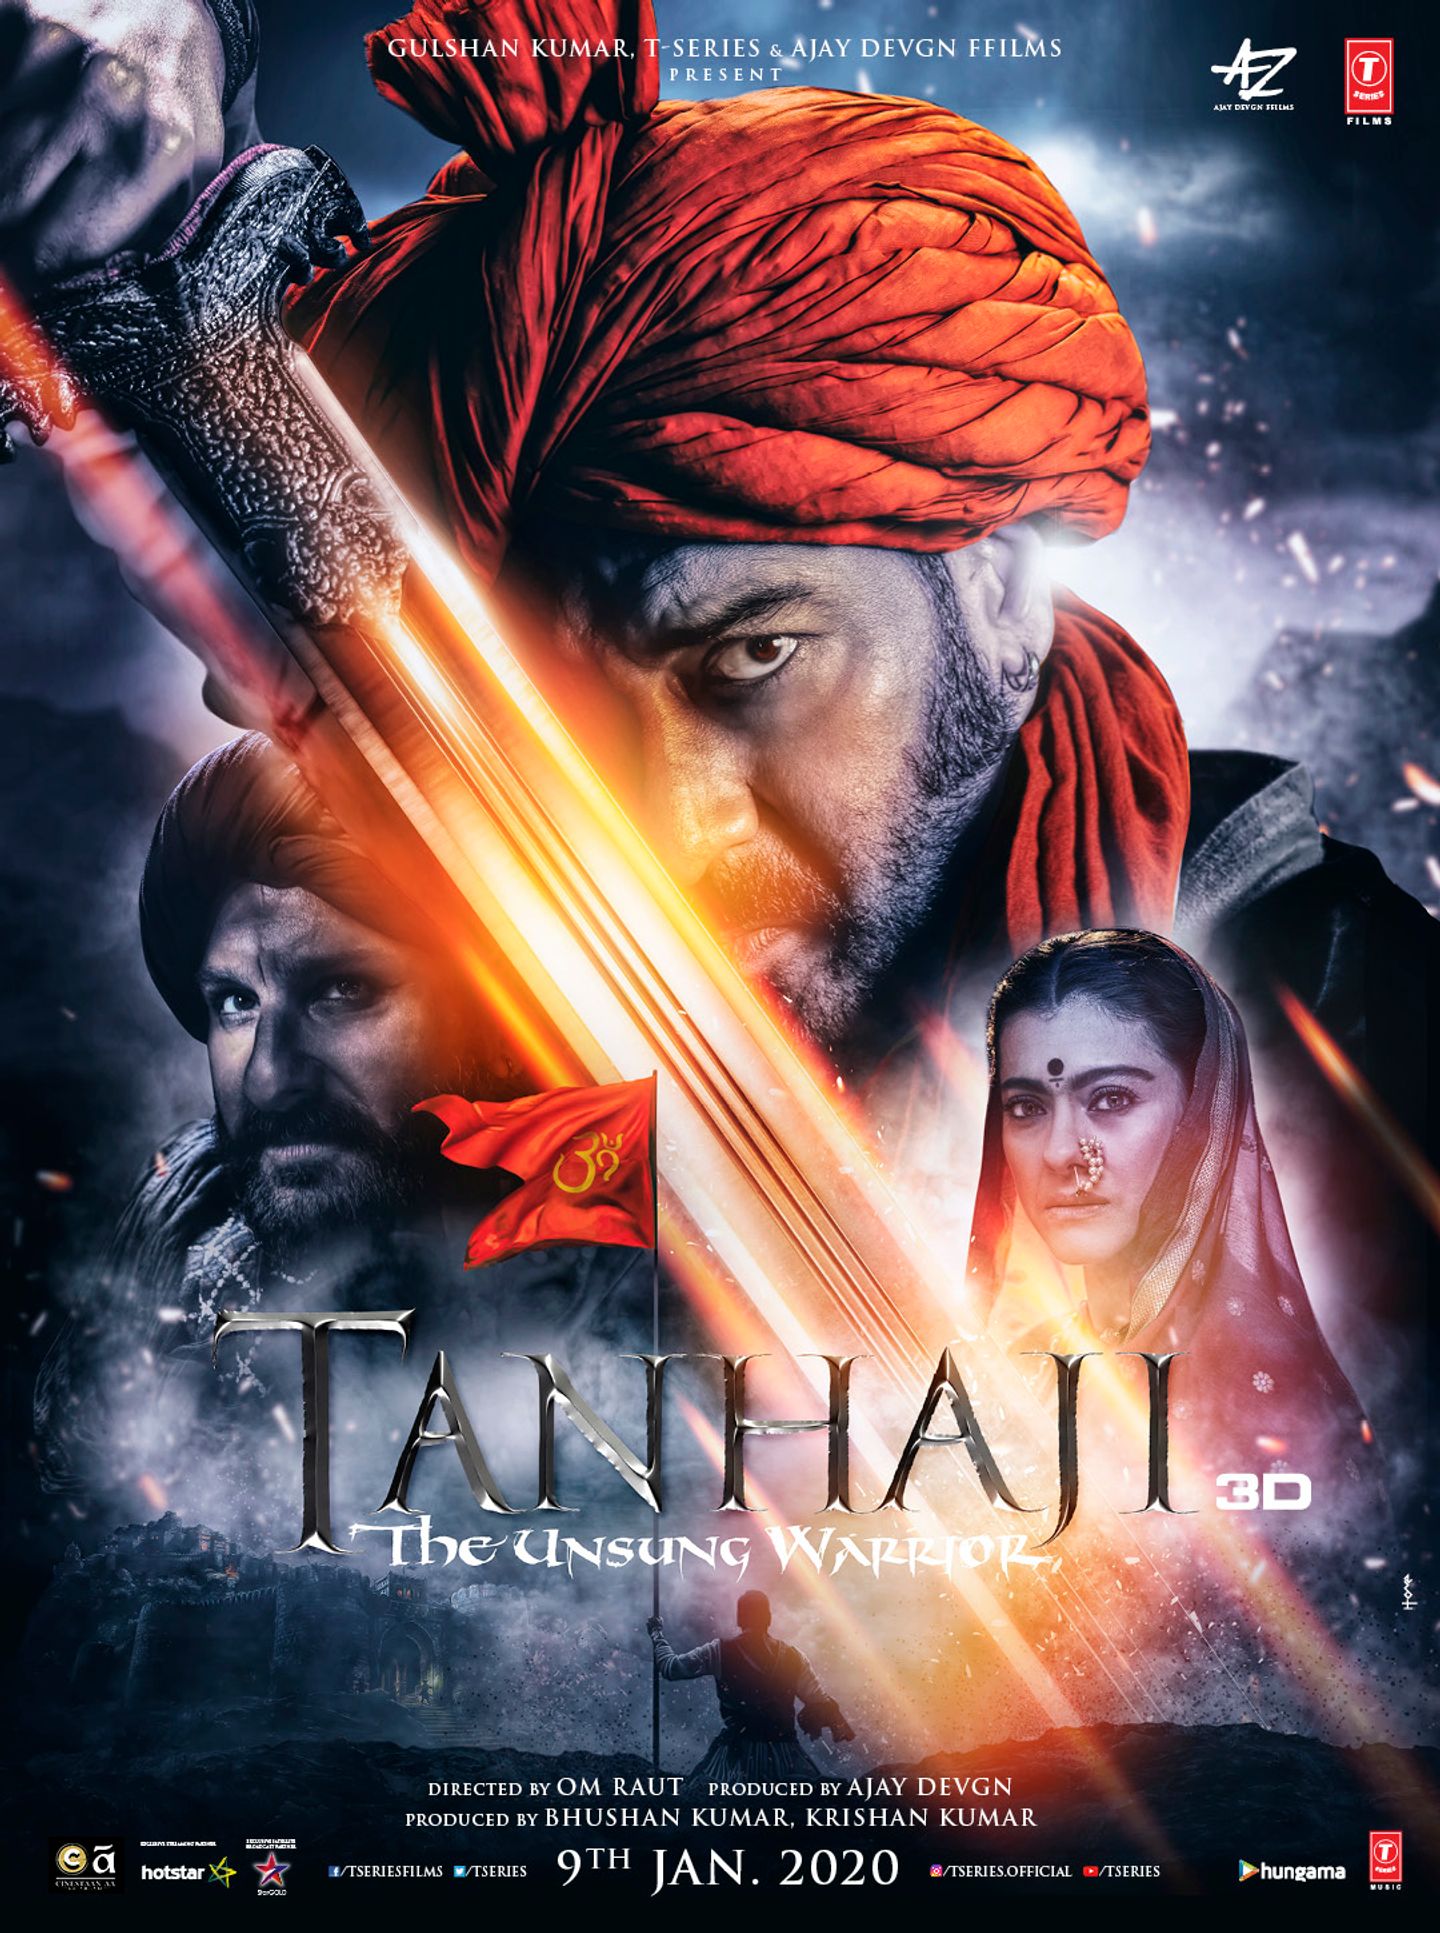 Plakat for 'Tanhaji'